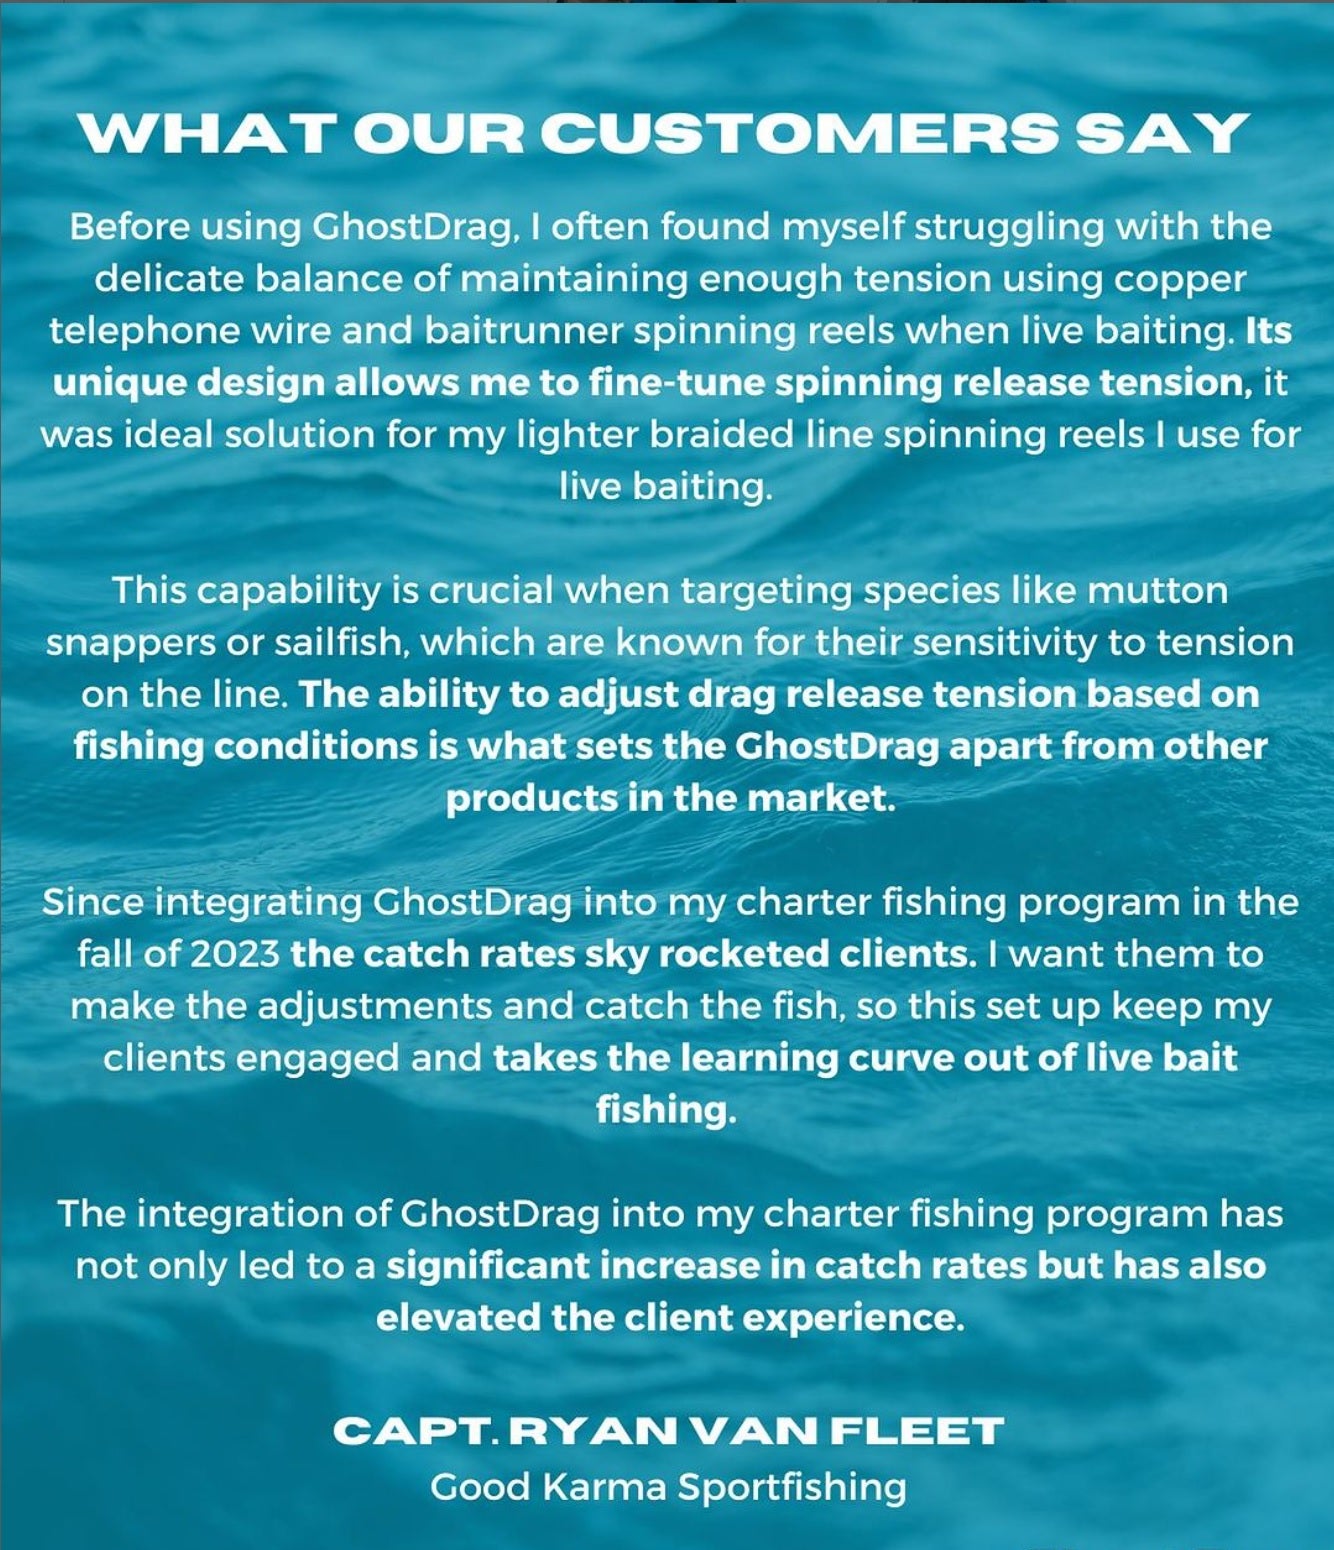 Good Karma Sportfishing professional endorsement of GhostDrag line release to catch more fish